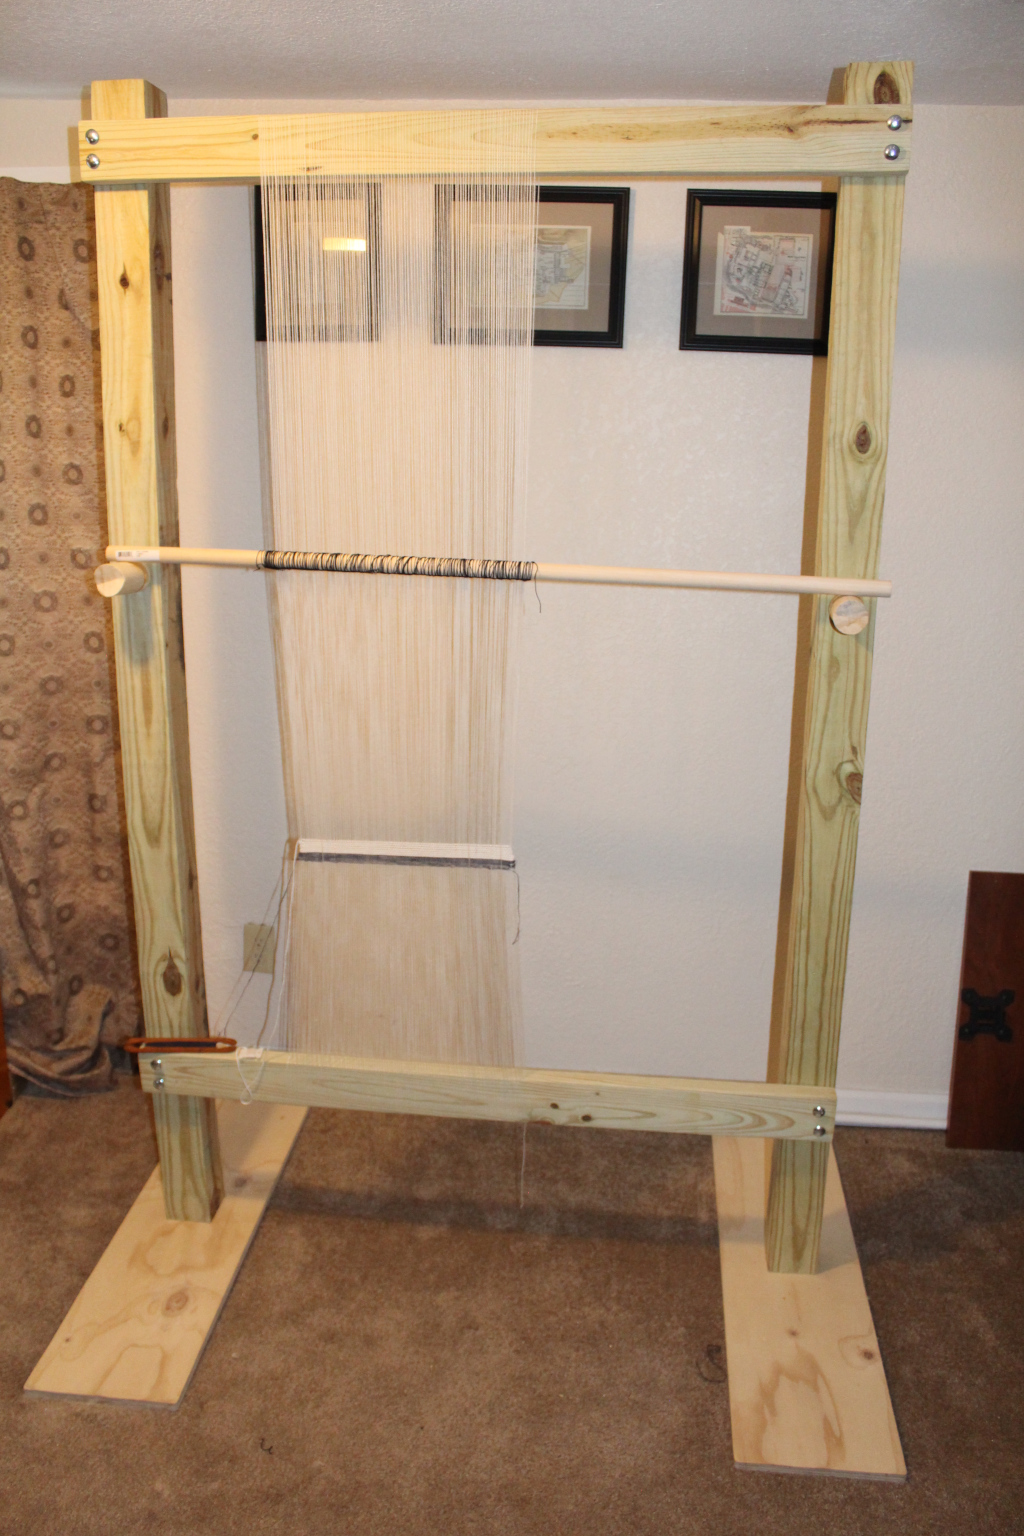 The Roman two-beam loom